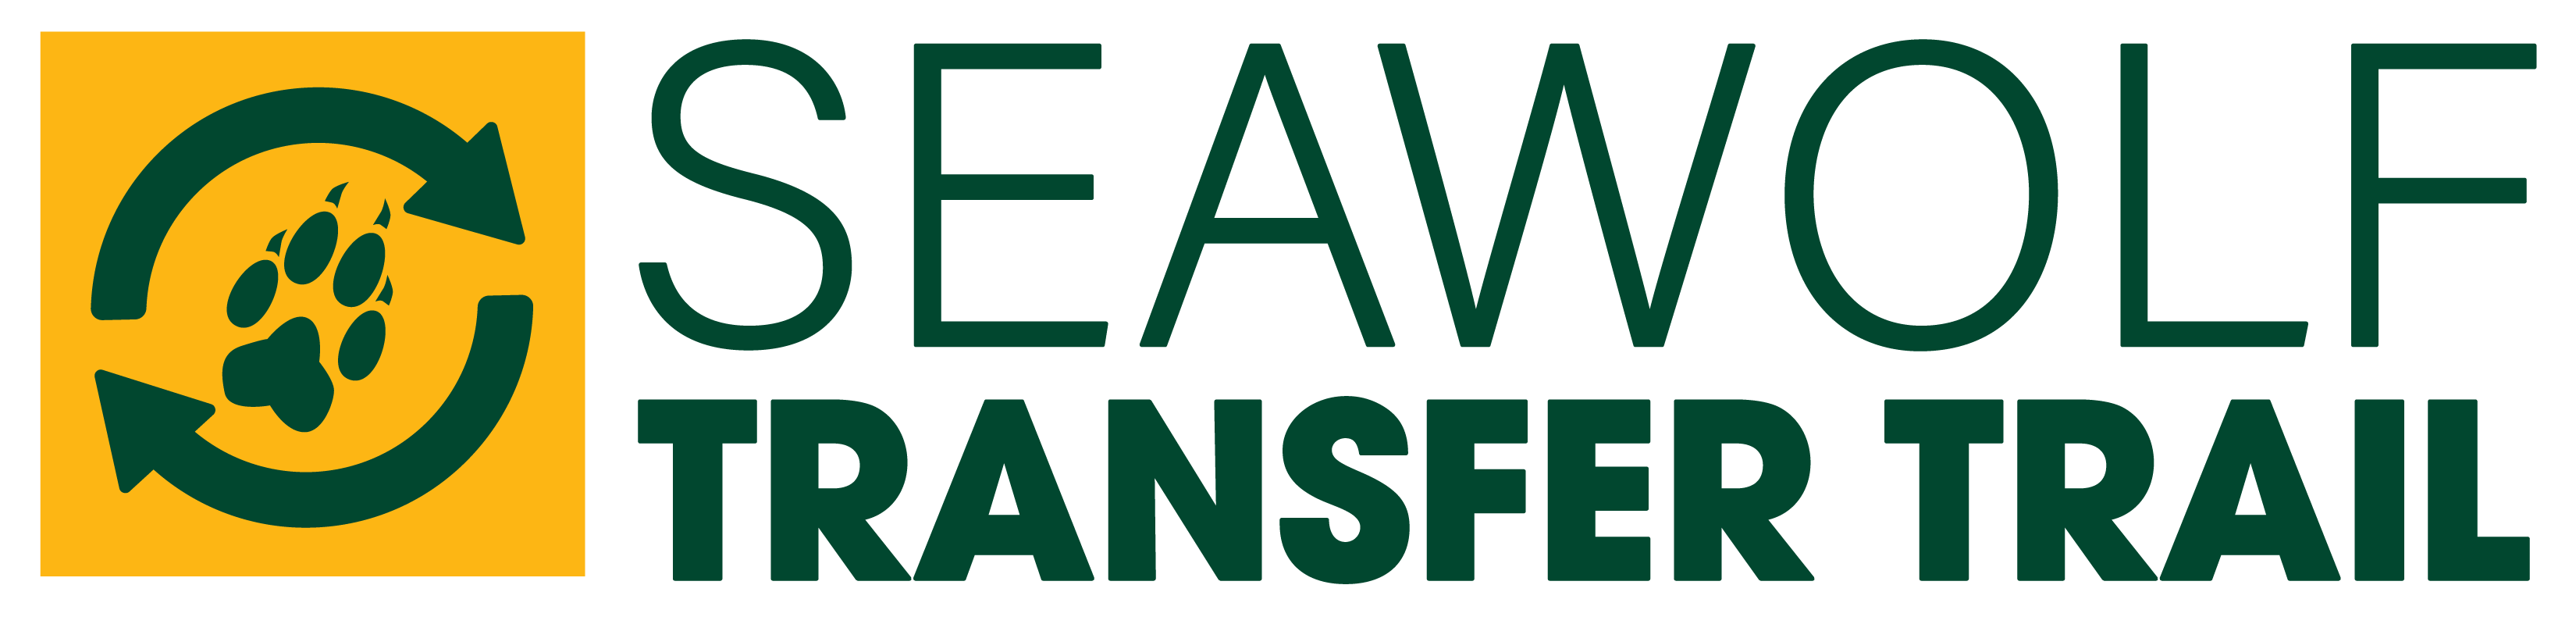 Seawolf Transfer Trail logo